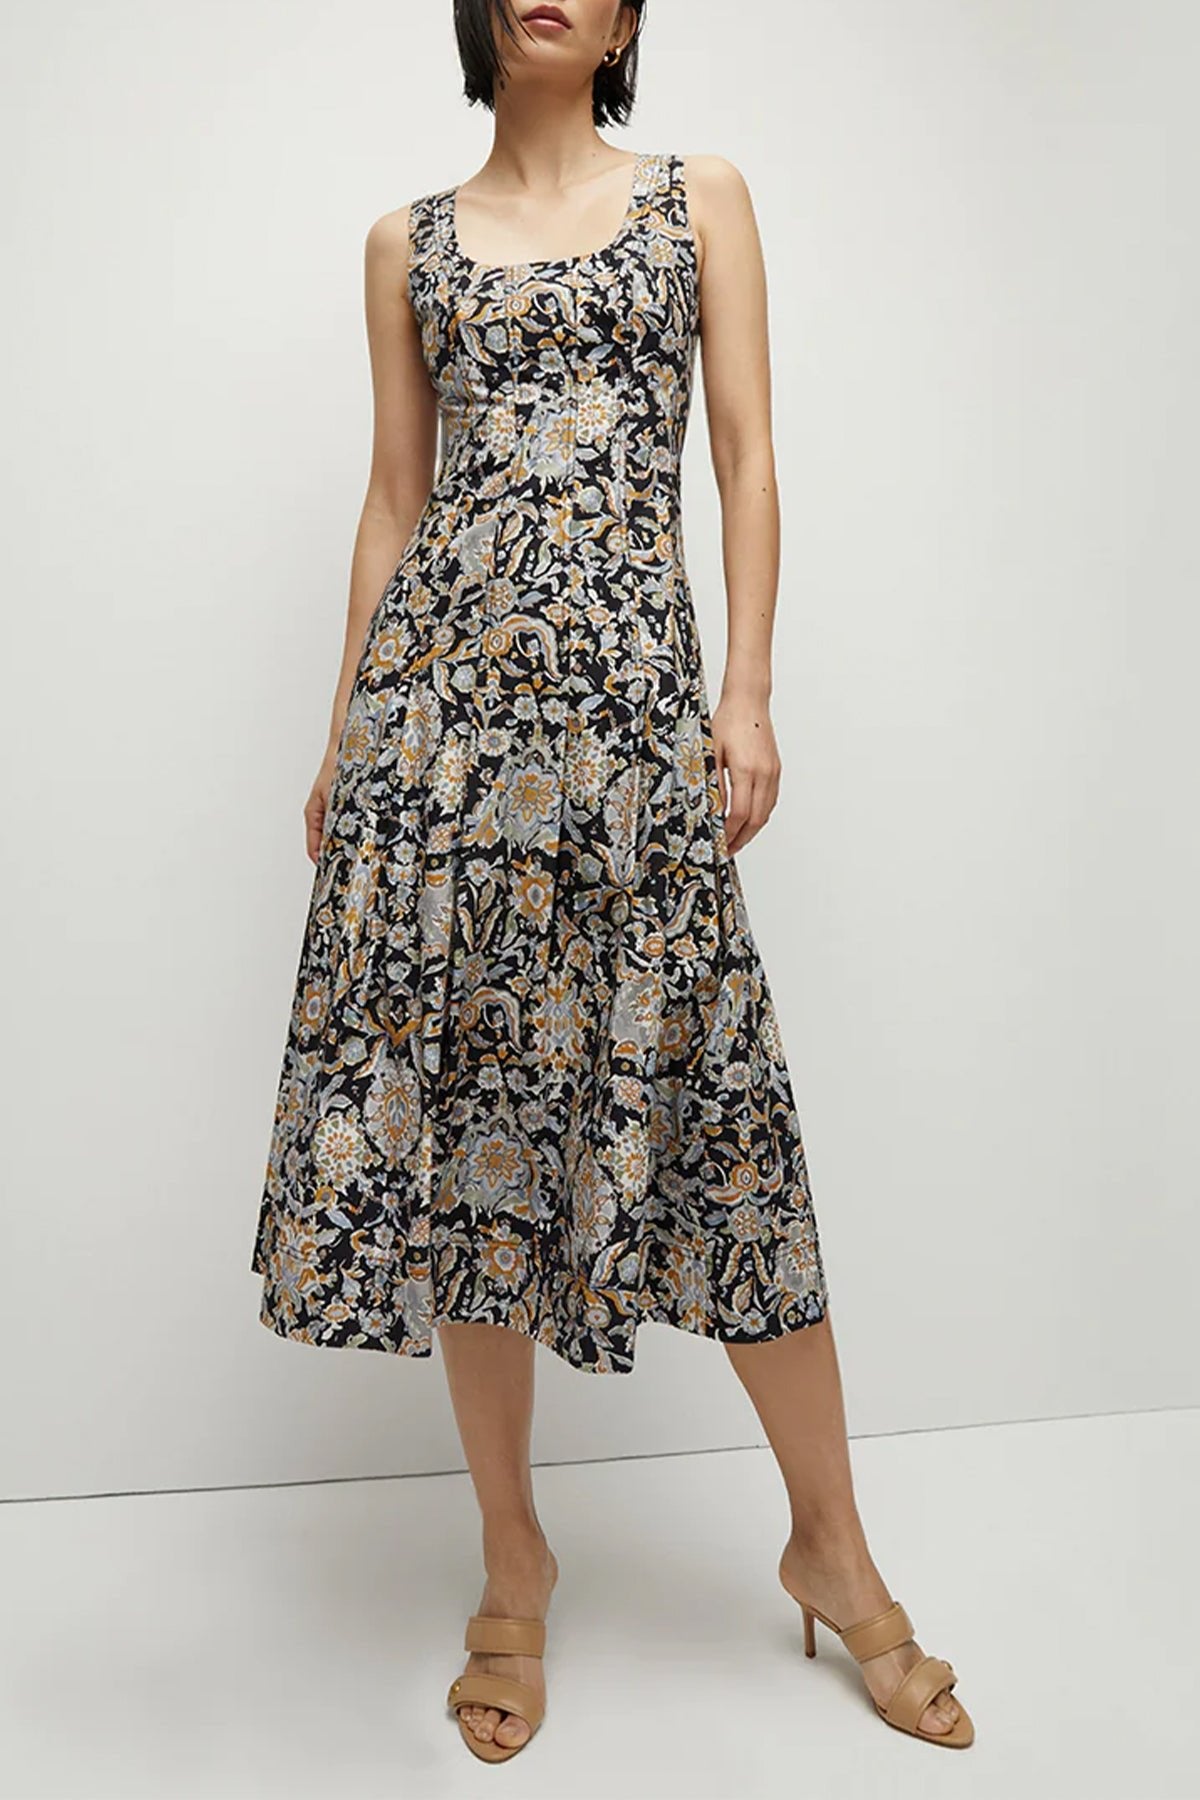 Jolie Paisley-Print Dress in Black Multi - shop-olivia.com